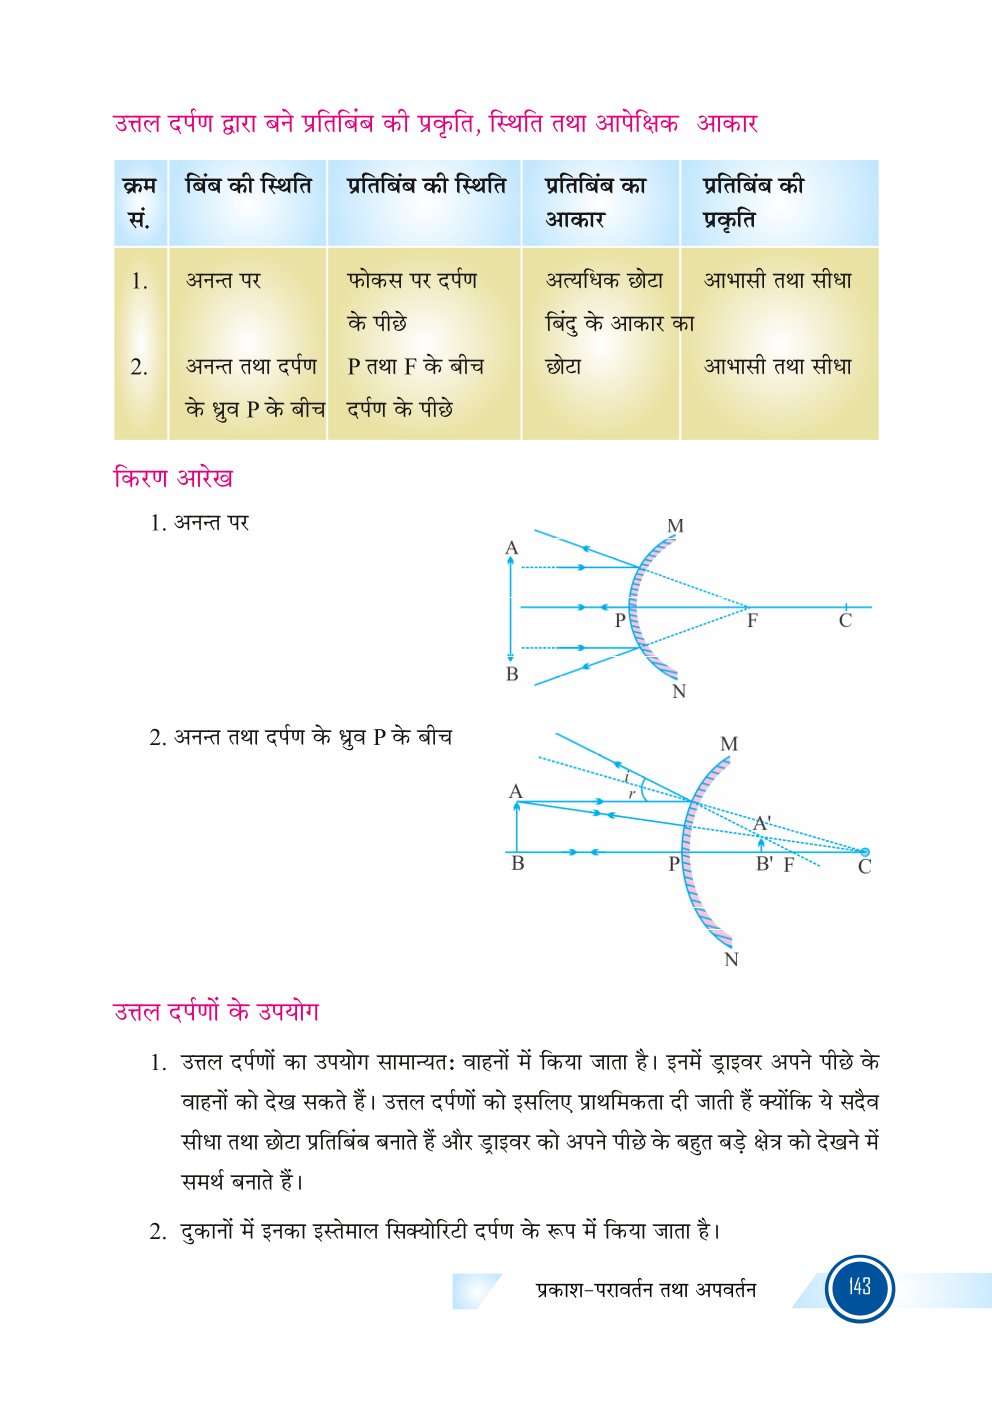 Bihar Board Class 10th Physics | Light Refraction and Reflection | Class 10 Physics Rivision Notes PDF | प्रकाश अपवर्तन तथा परवर्तन | बिहार बोर्ड क्लास 10वीं भौतिकी नोट्स | कक्षा 10 भौतिकी हिंदी में नोट्स